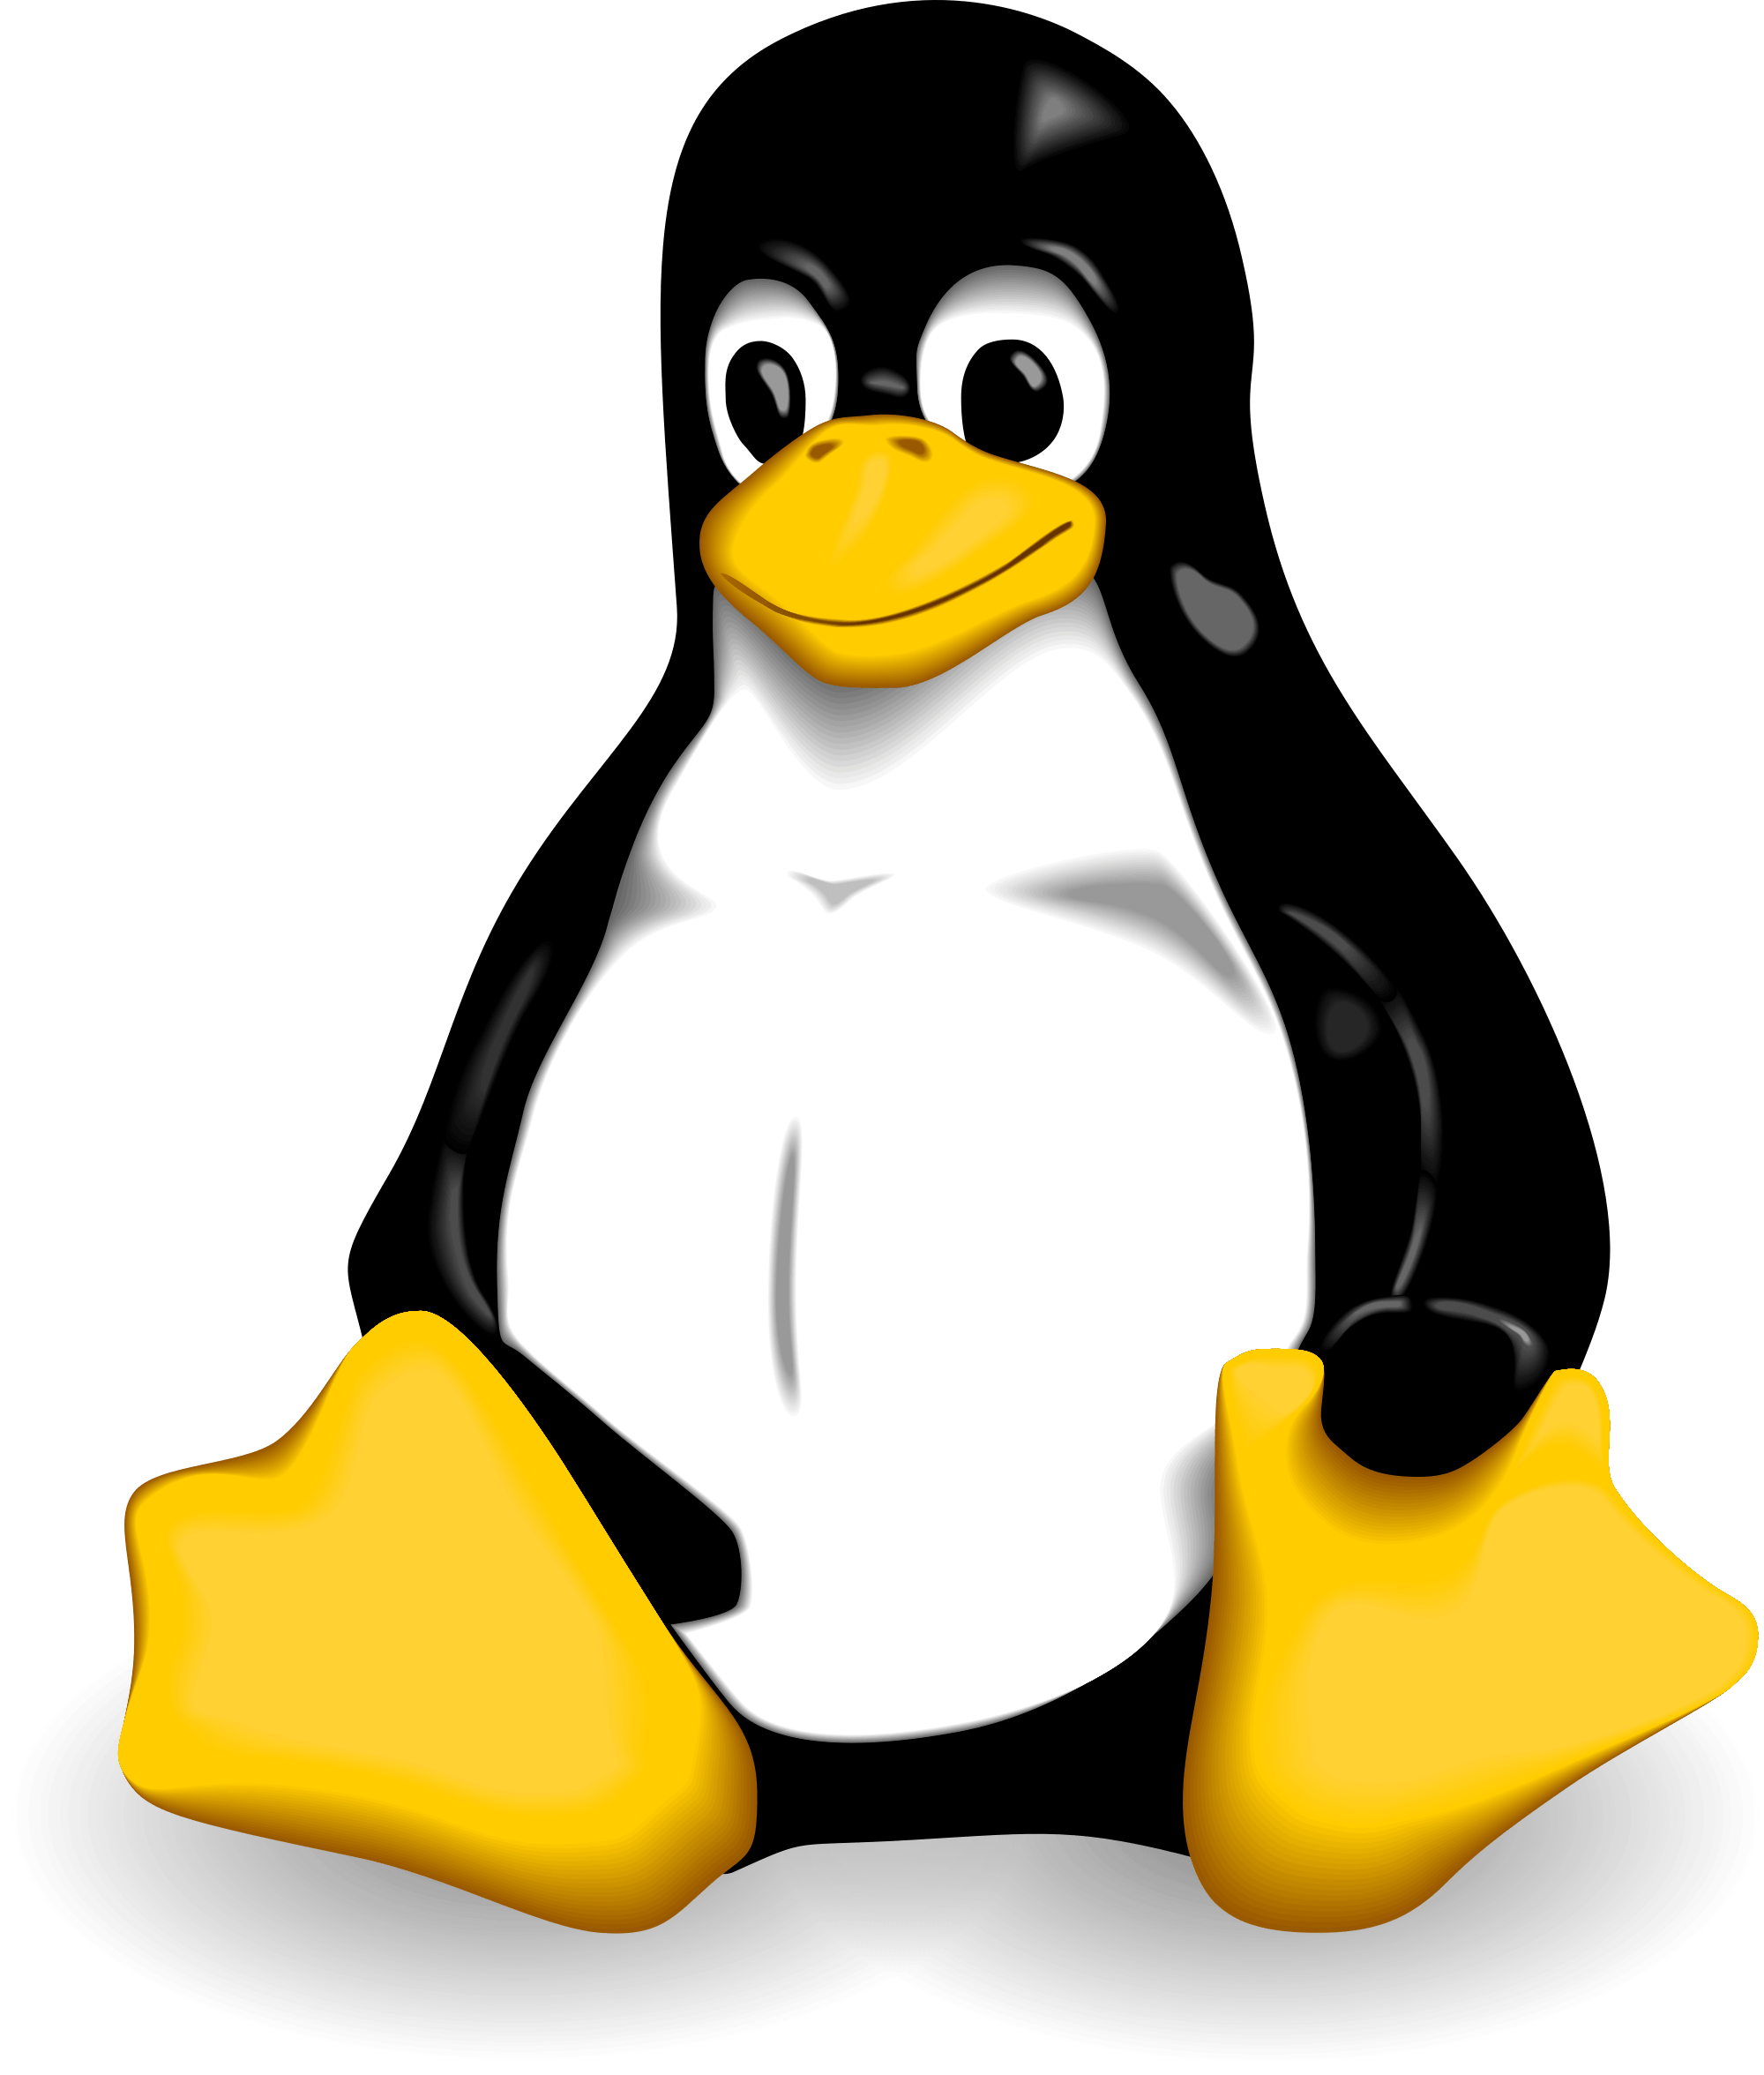 Latest Linux Logo - Image - Linux logo.png | Logopedia | FANDOM powered by Wikia